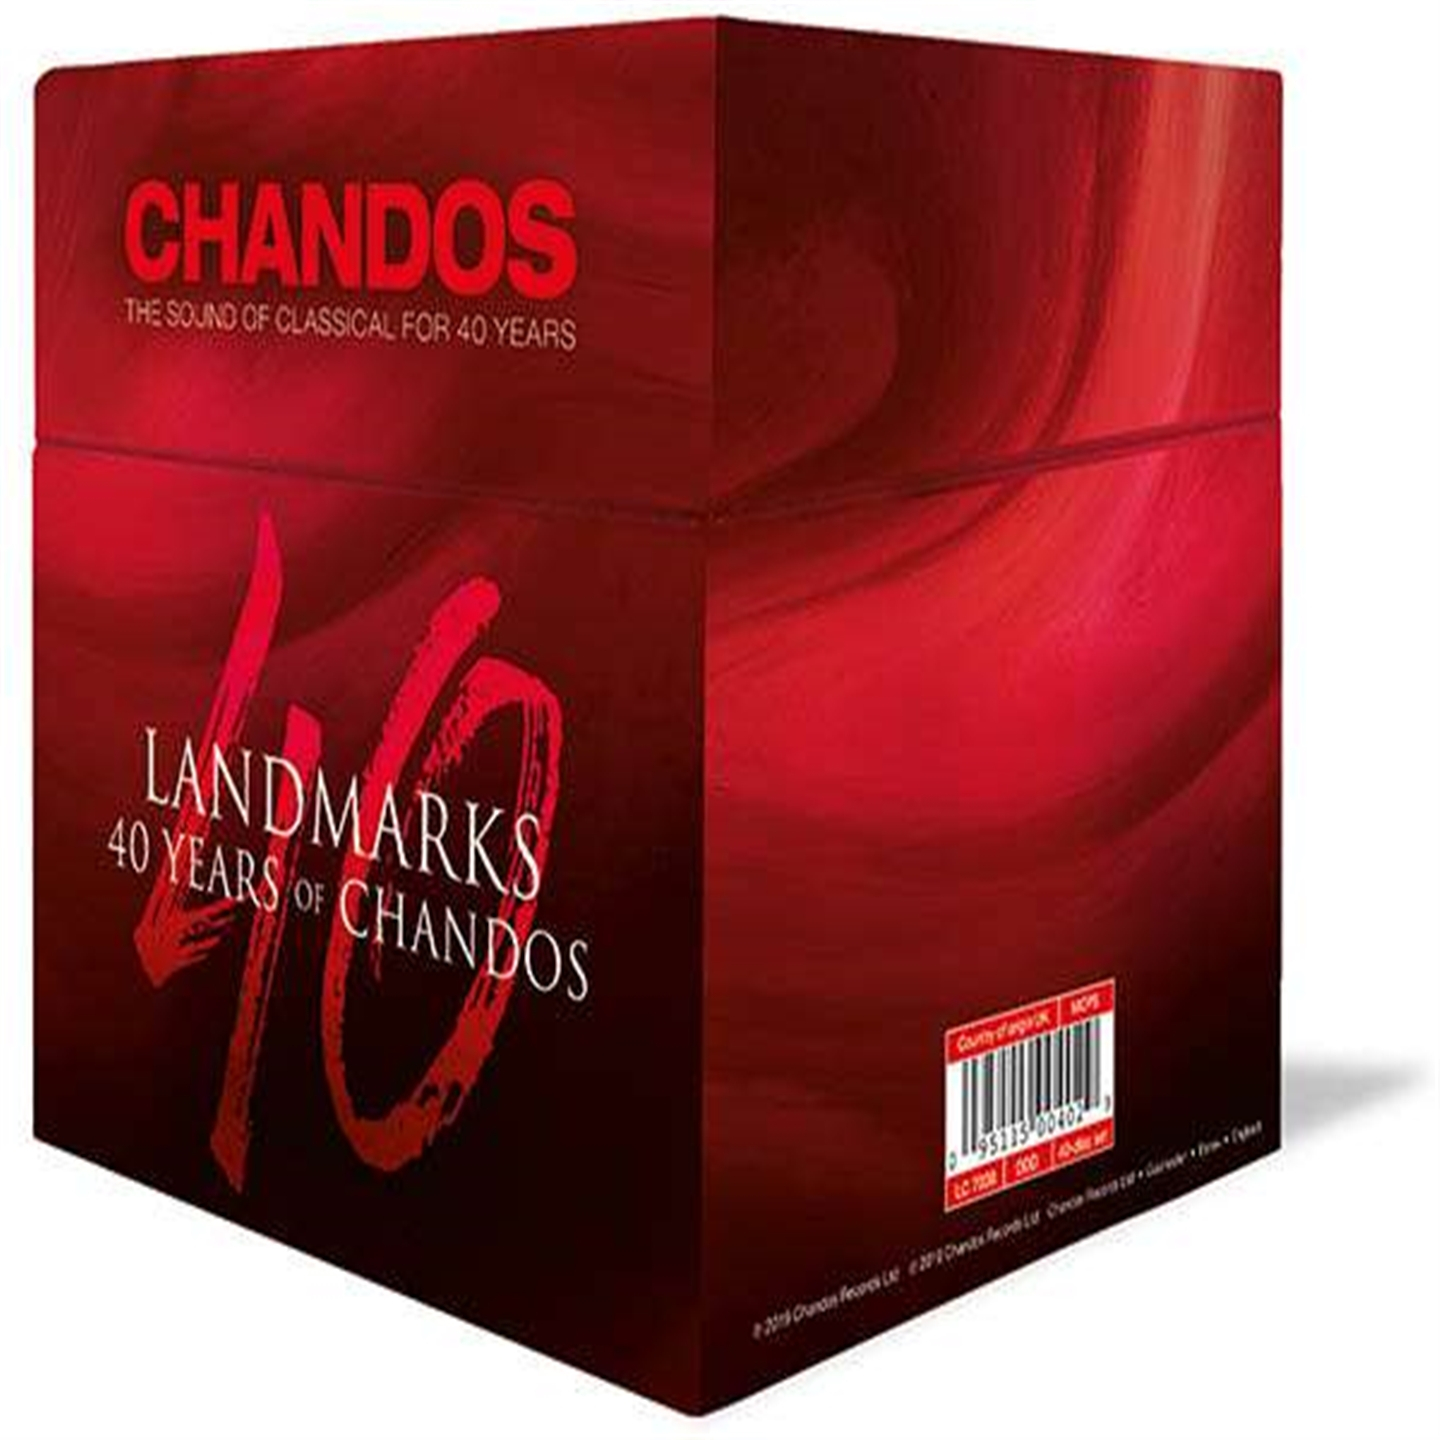 LANDMARKS - 40 YEARS OF CHANDOS